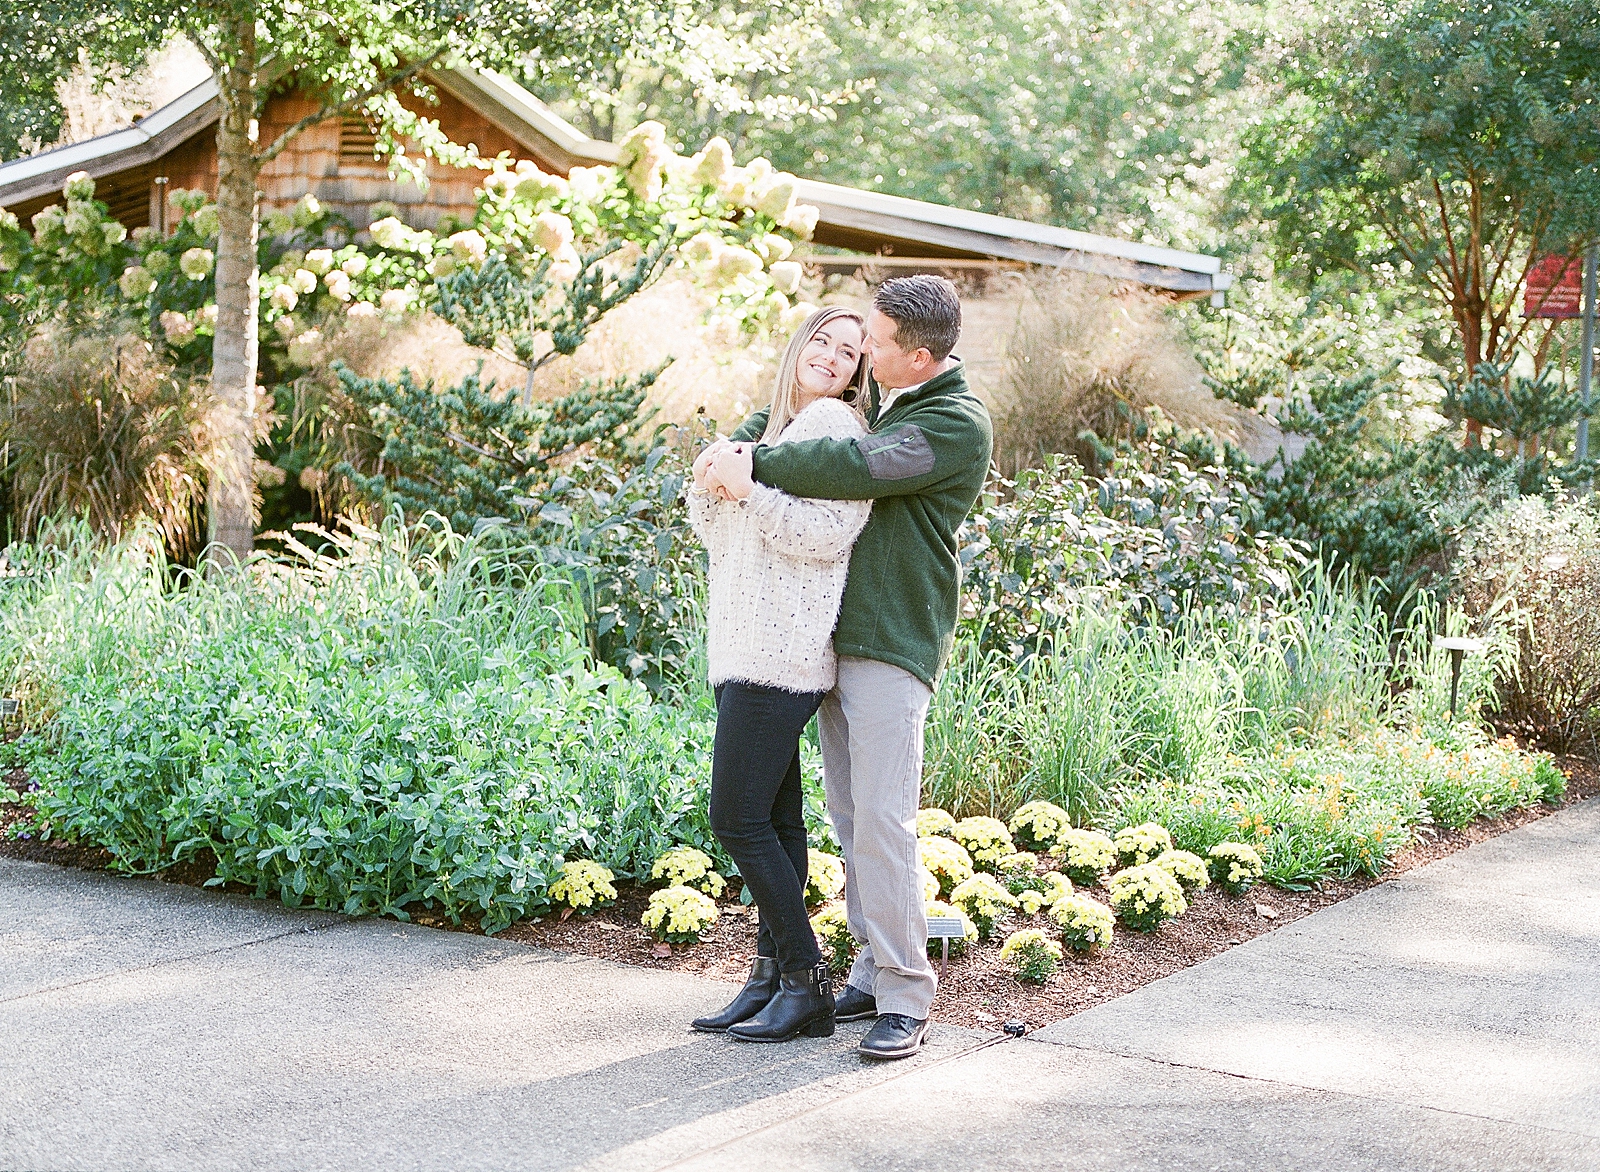 North Carolina Arboretum Couple hugging smiling at each other Photo